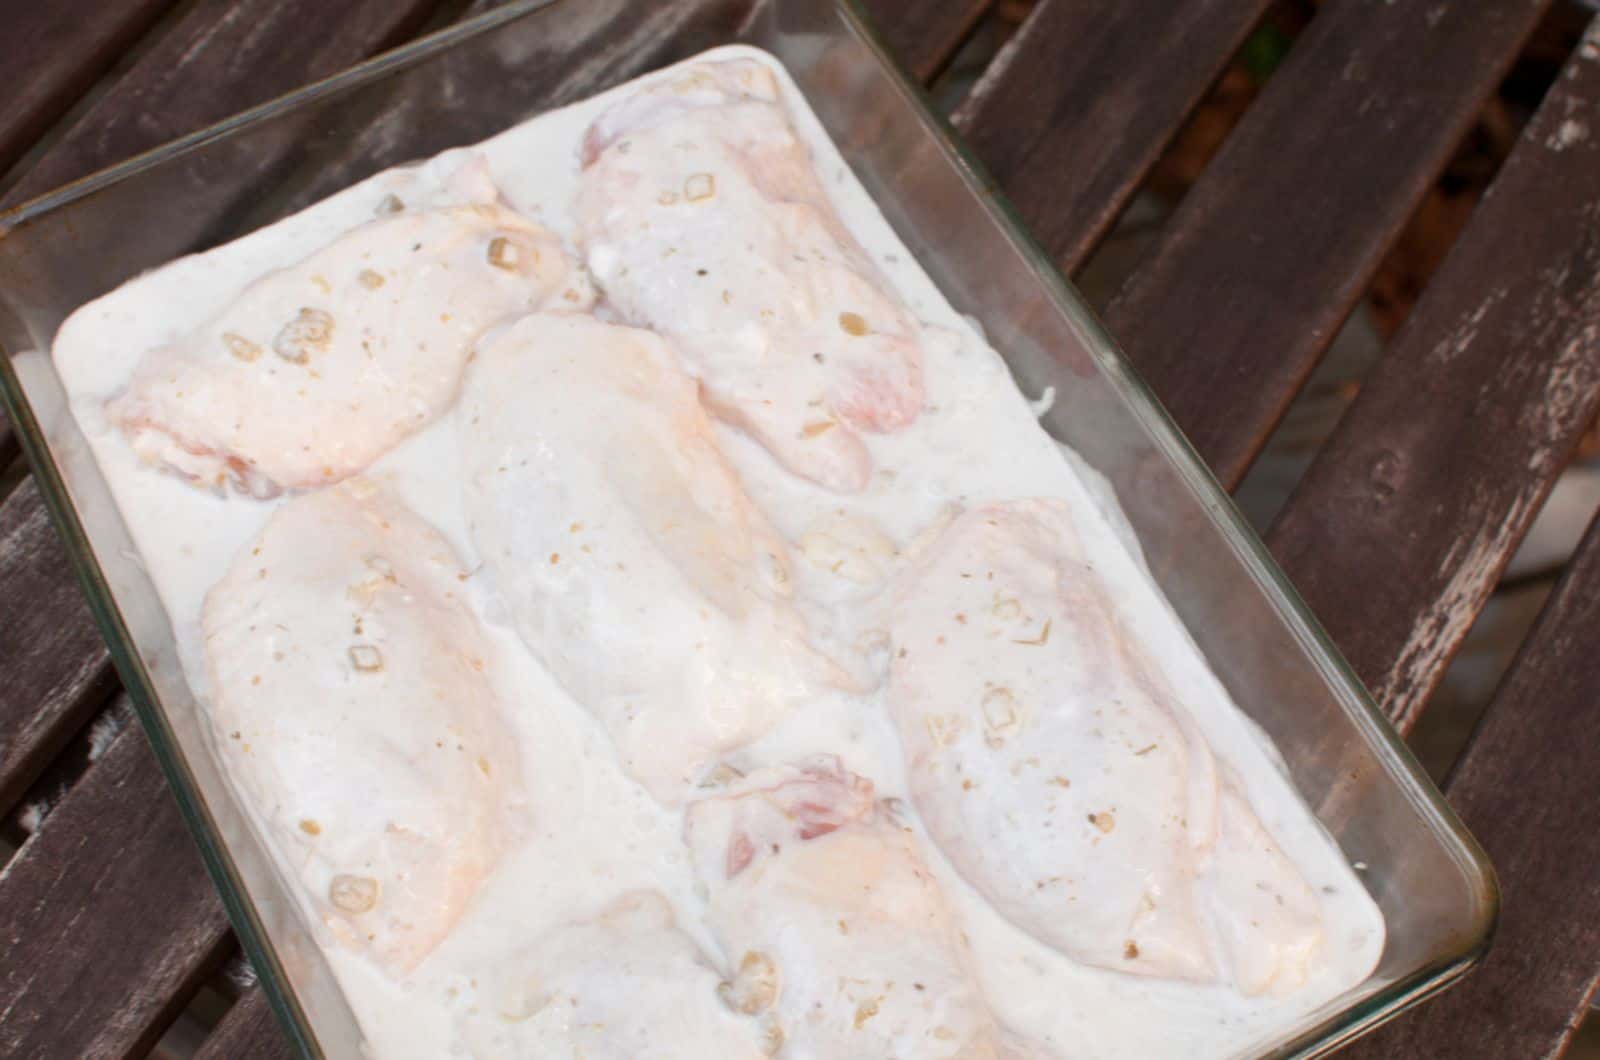 Marinated chicken thighs in spiced cream